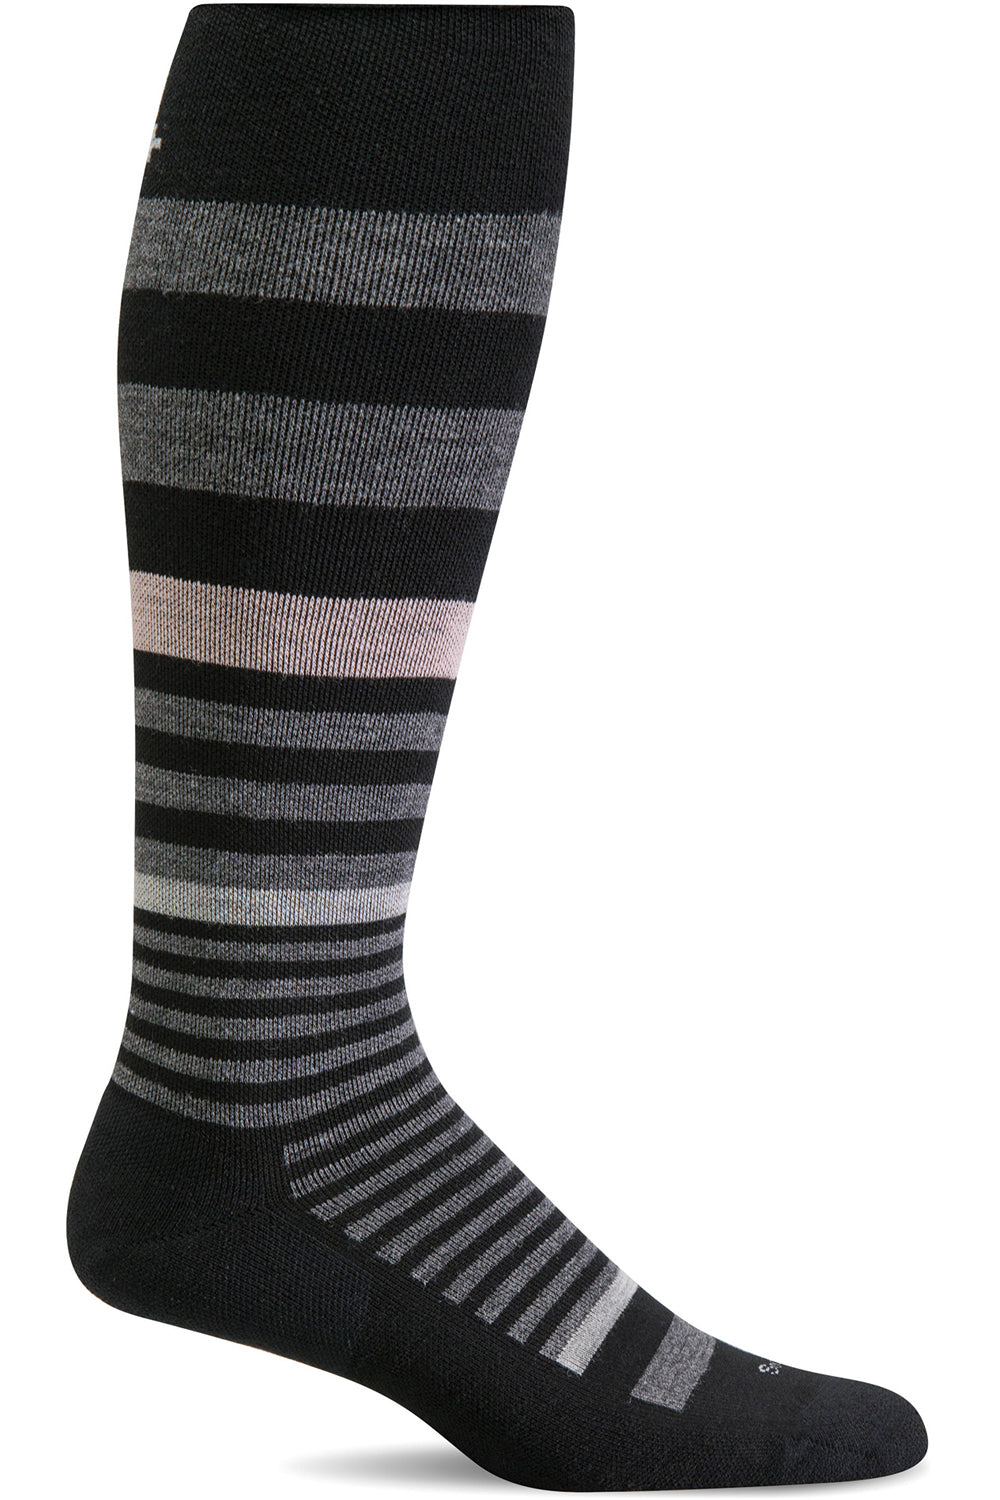 Sockwell Women's Orbital Stripe Sock in Black Multi color from the side